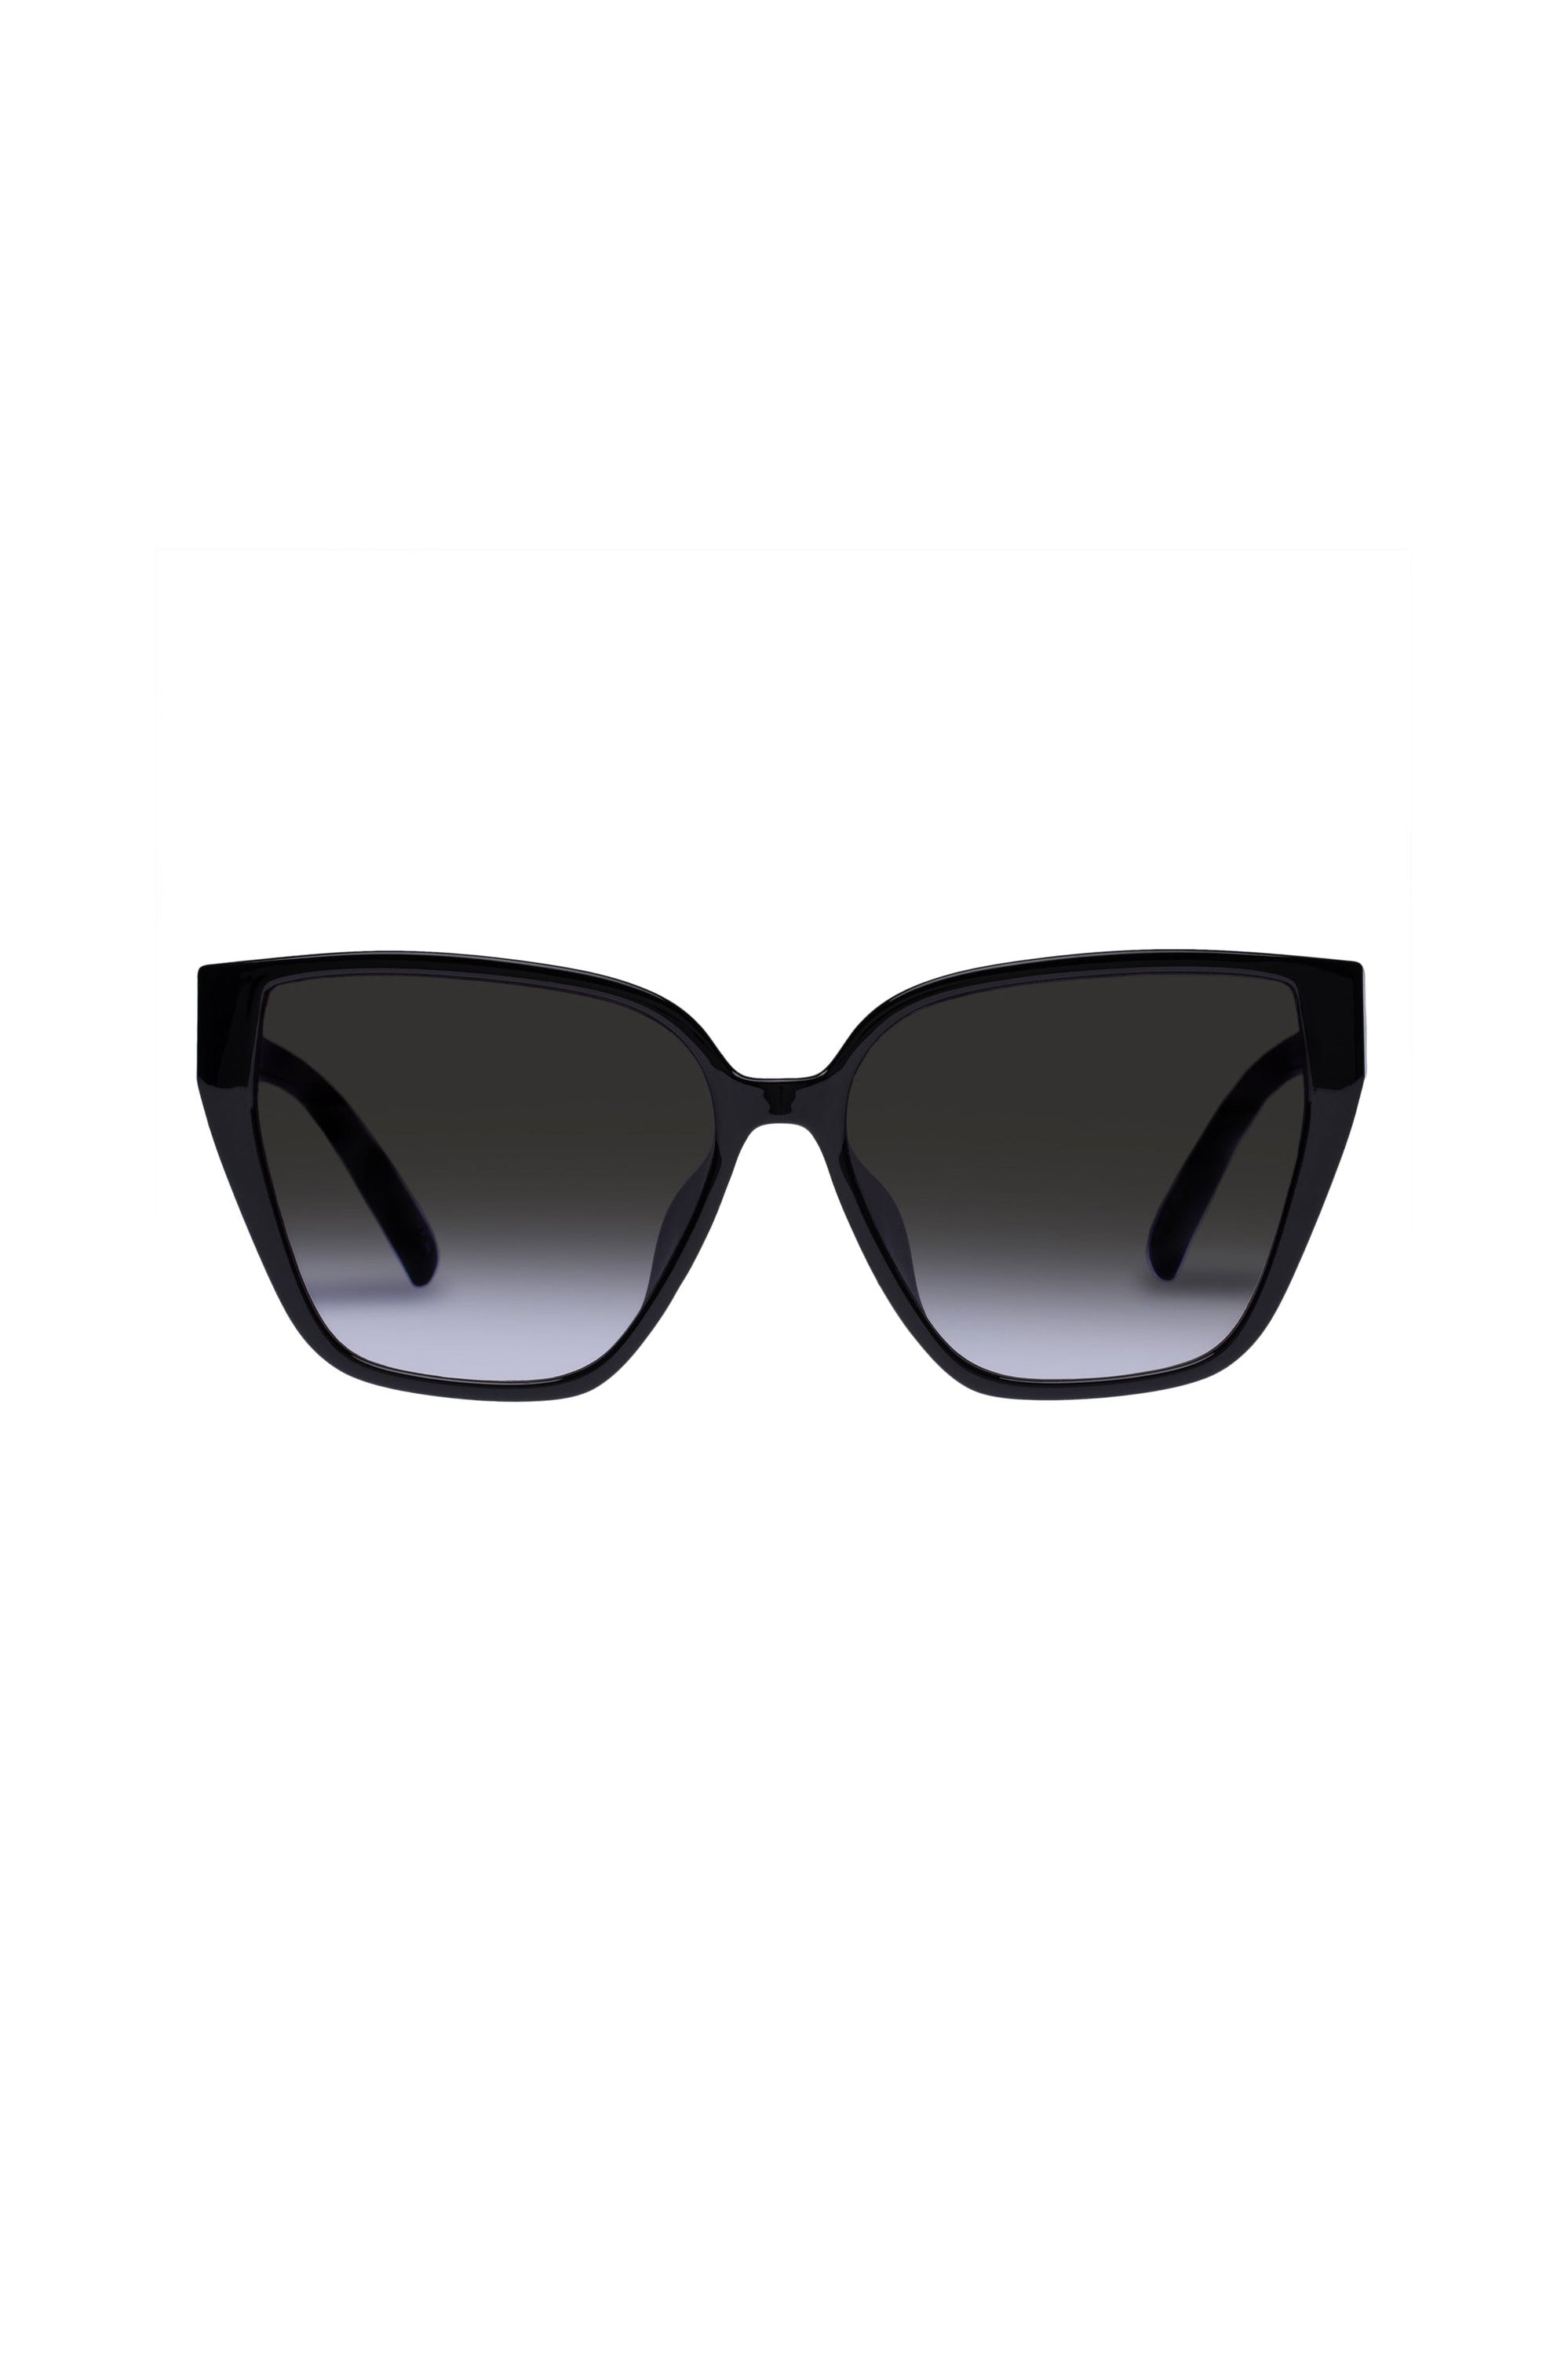 Le Specs Fash-Hun Sunglasses - Shiny Black - RUM Amsterdam